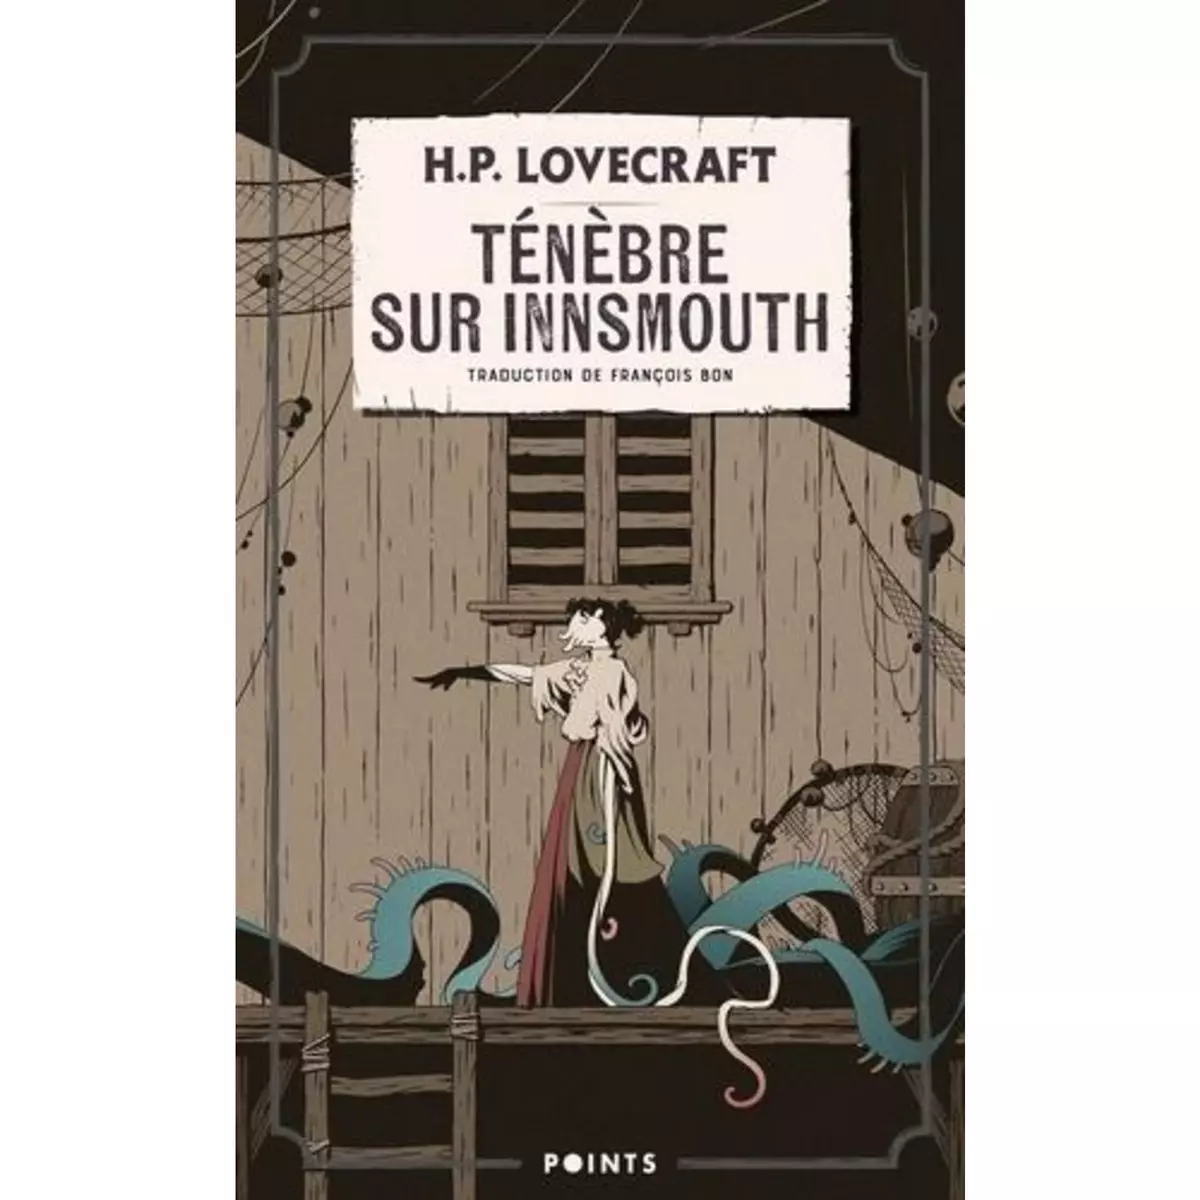  TENEBRE SUR INNSMOUTH, Lovecraft Howard Phillips